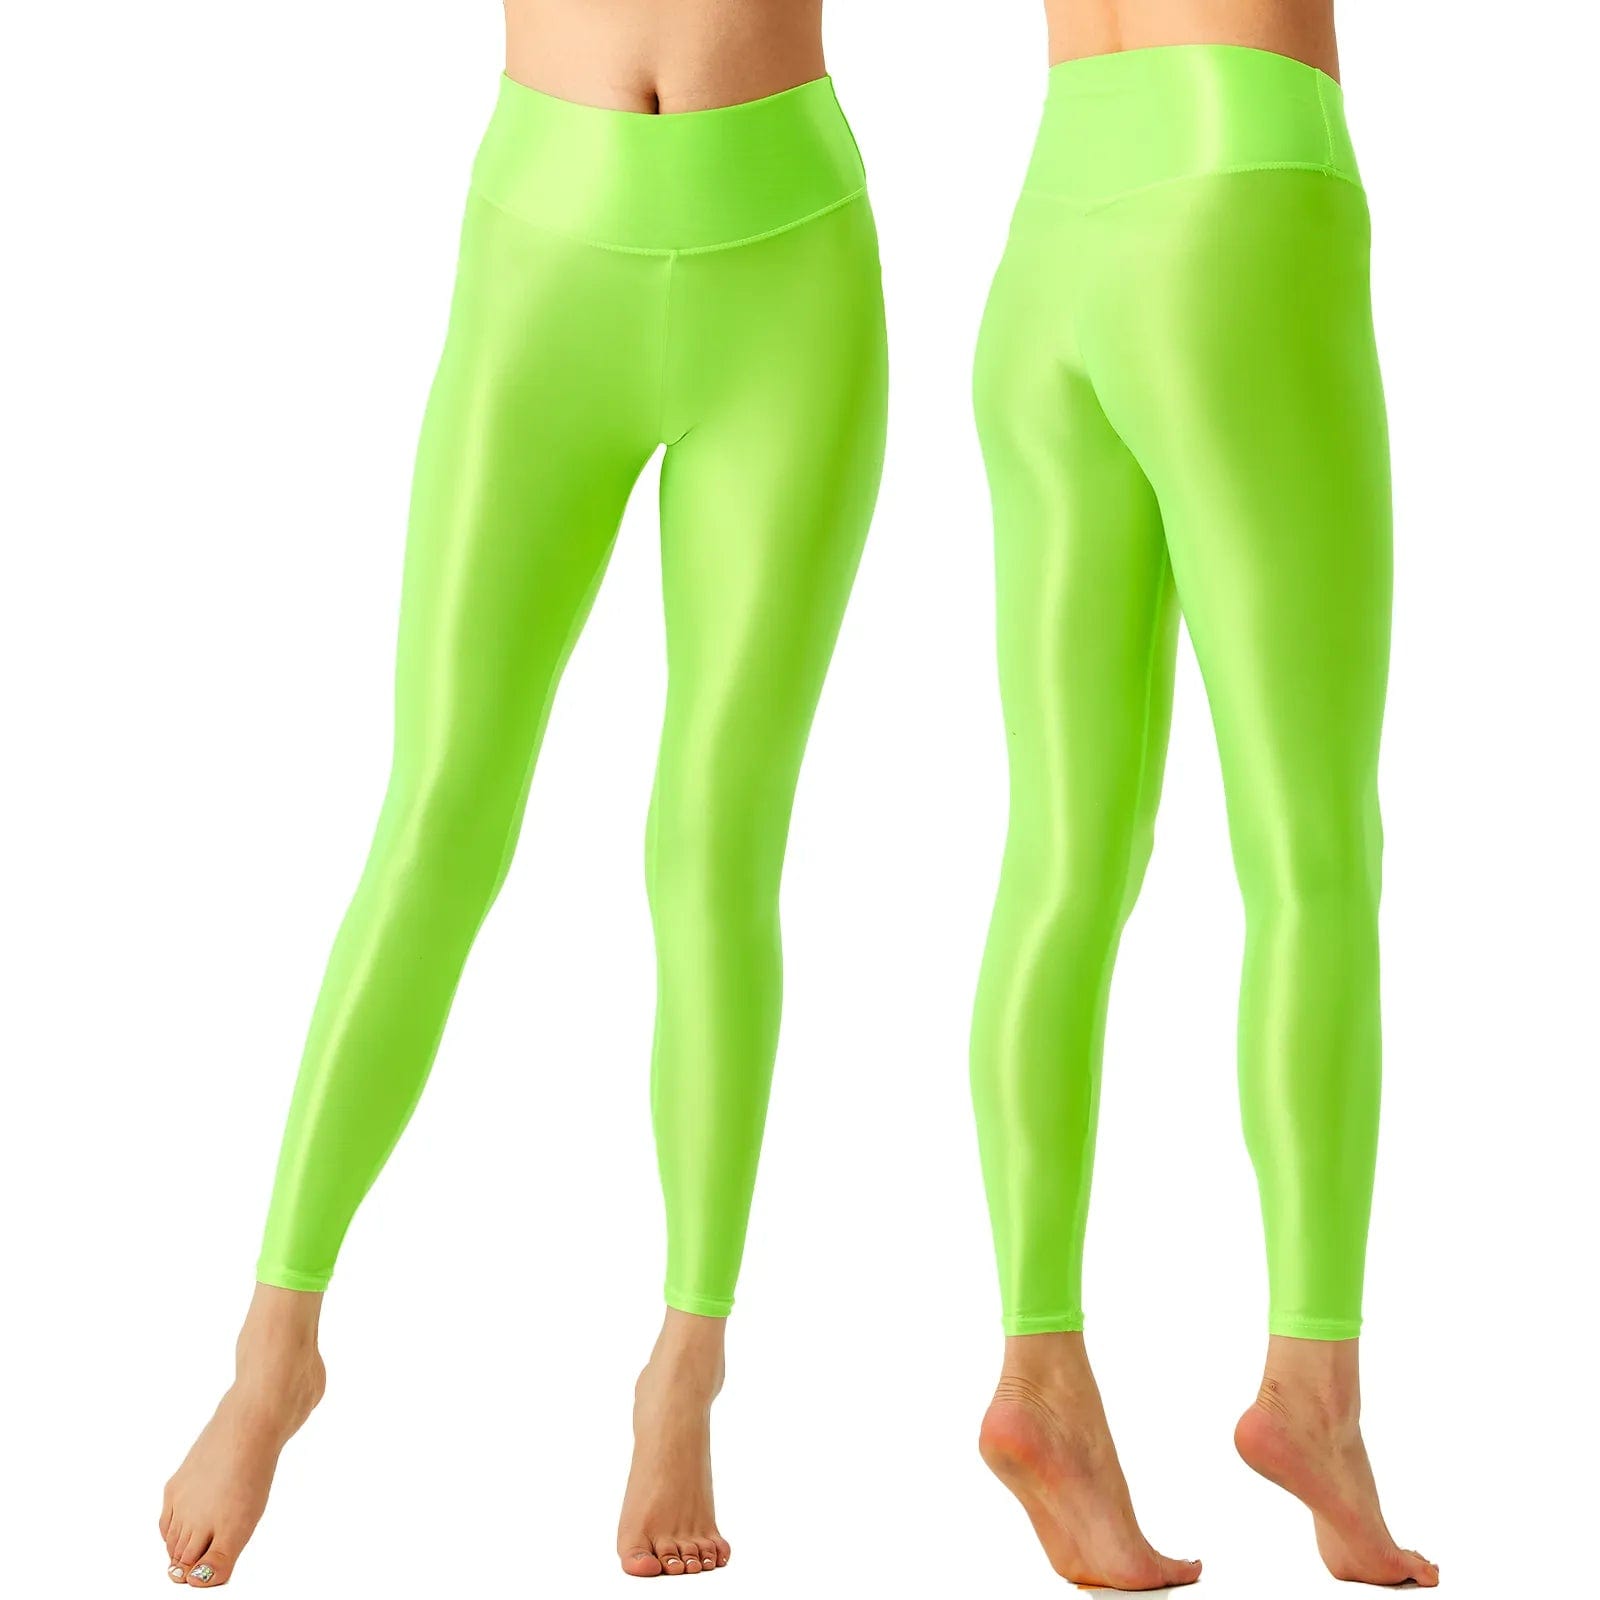 Kinky Cloth Fluorescent Green A / M Glossy Elastic Leggings Pants